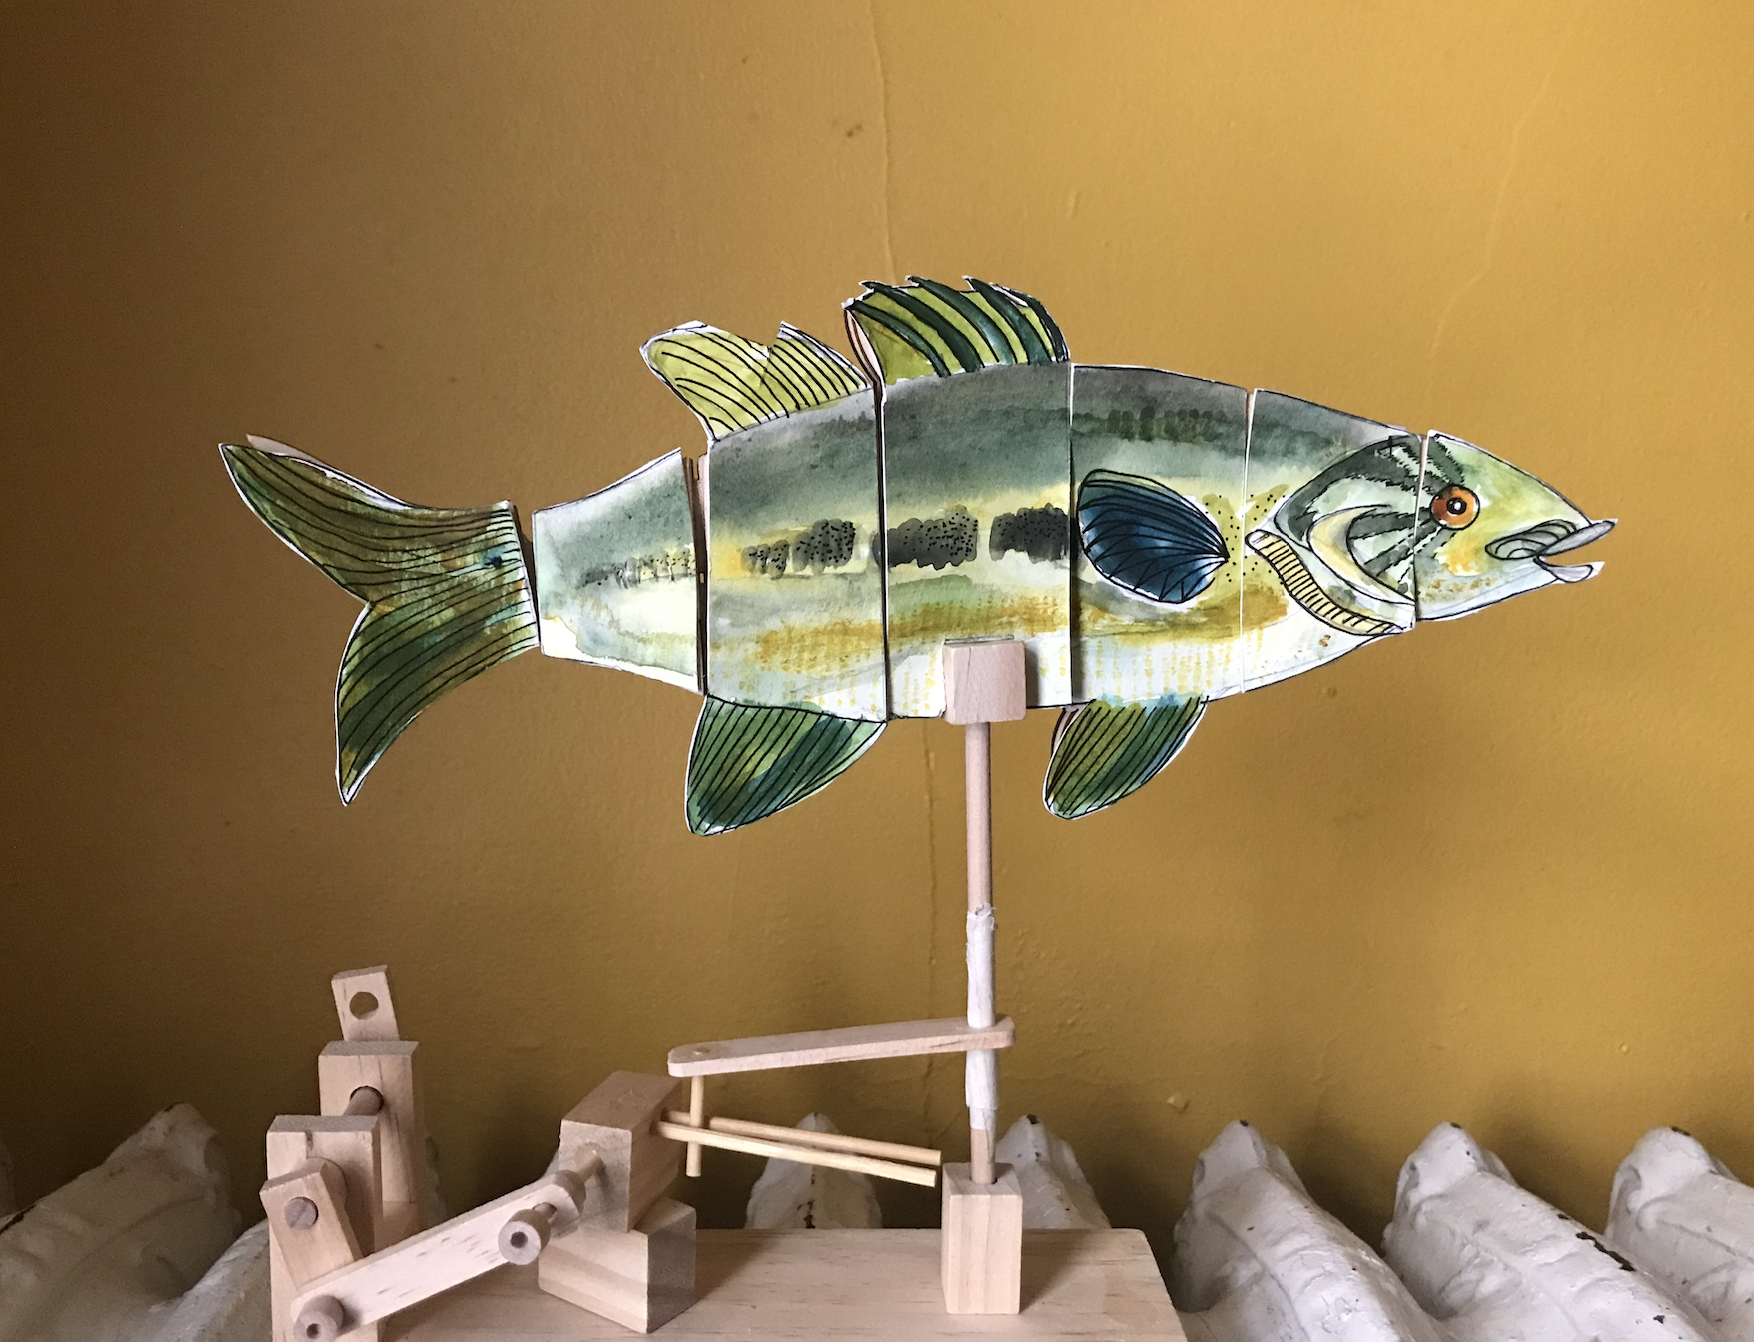 A fish puppet